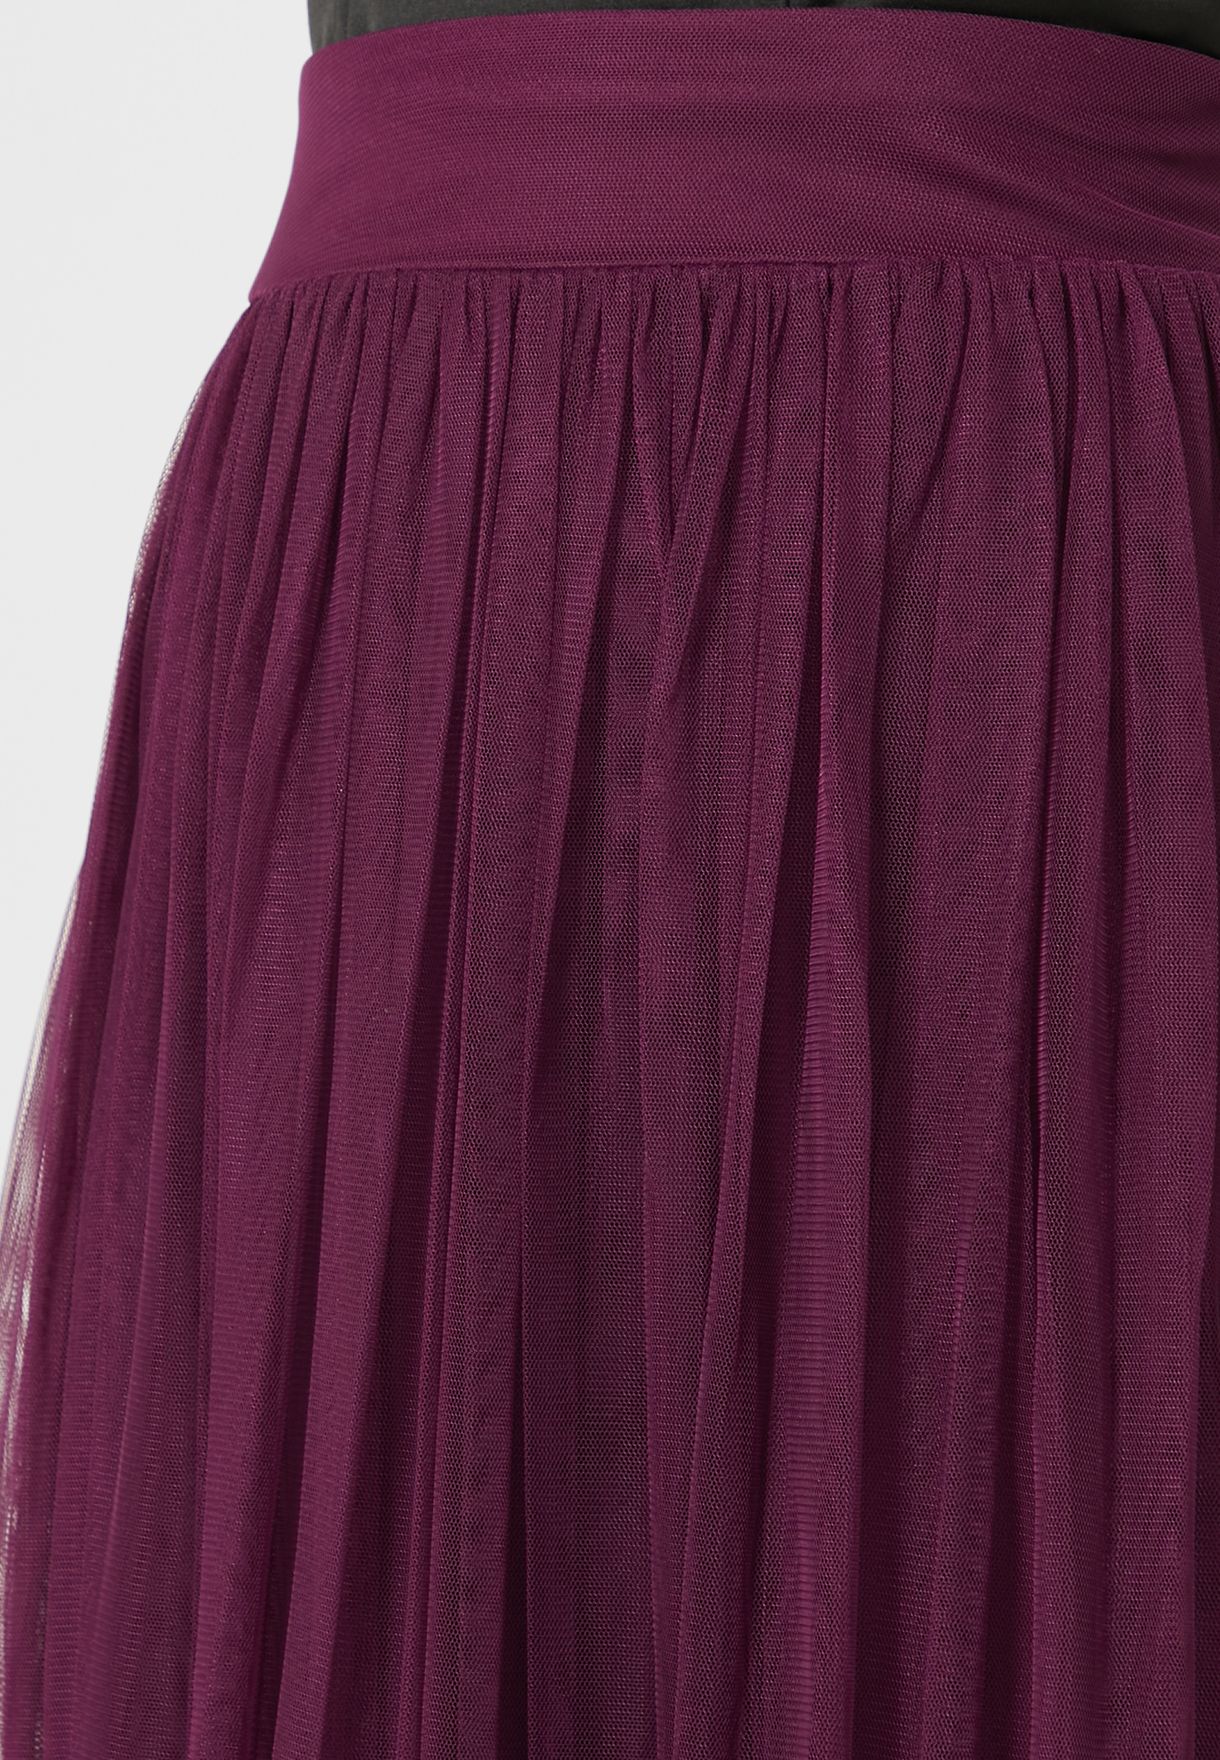 High Waist Midi Skirt